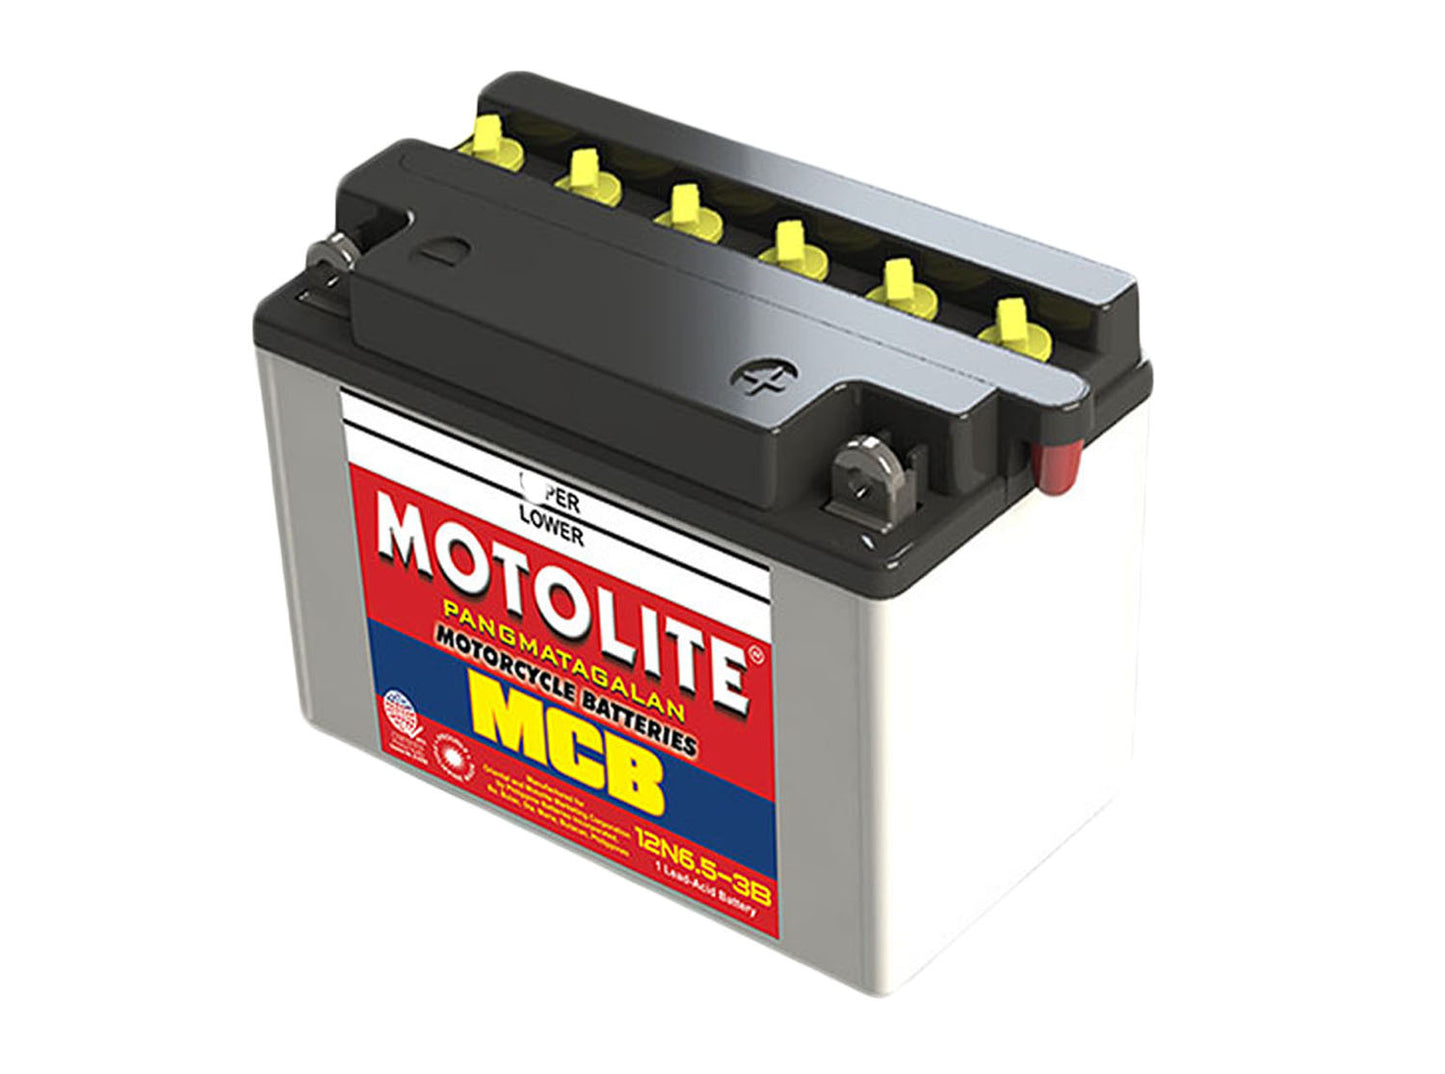 Motolite Motorcycle Battery-Low Maintenance Price, Buy Online